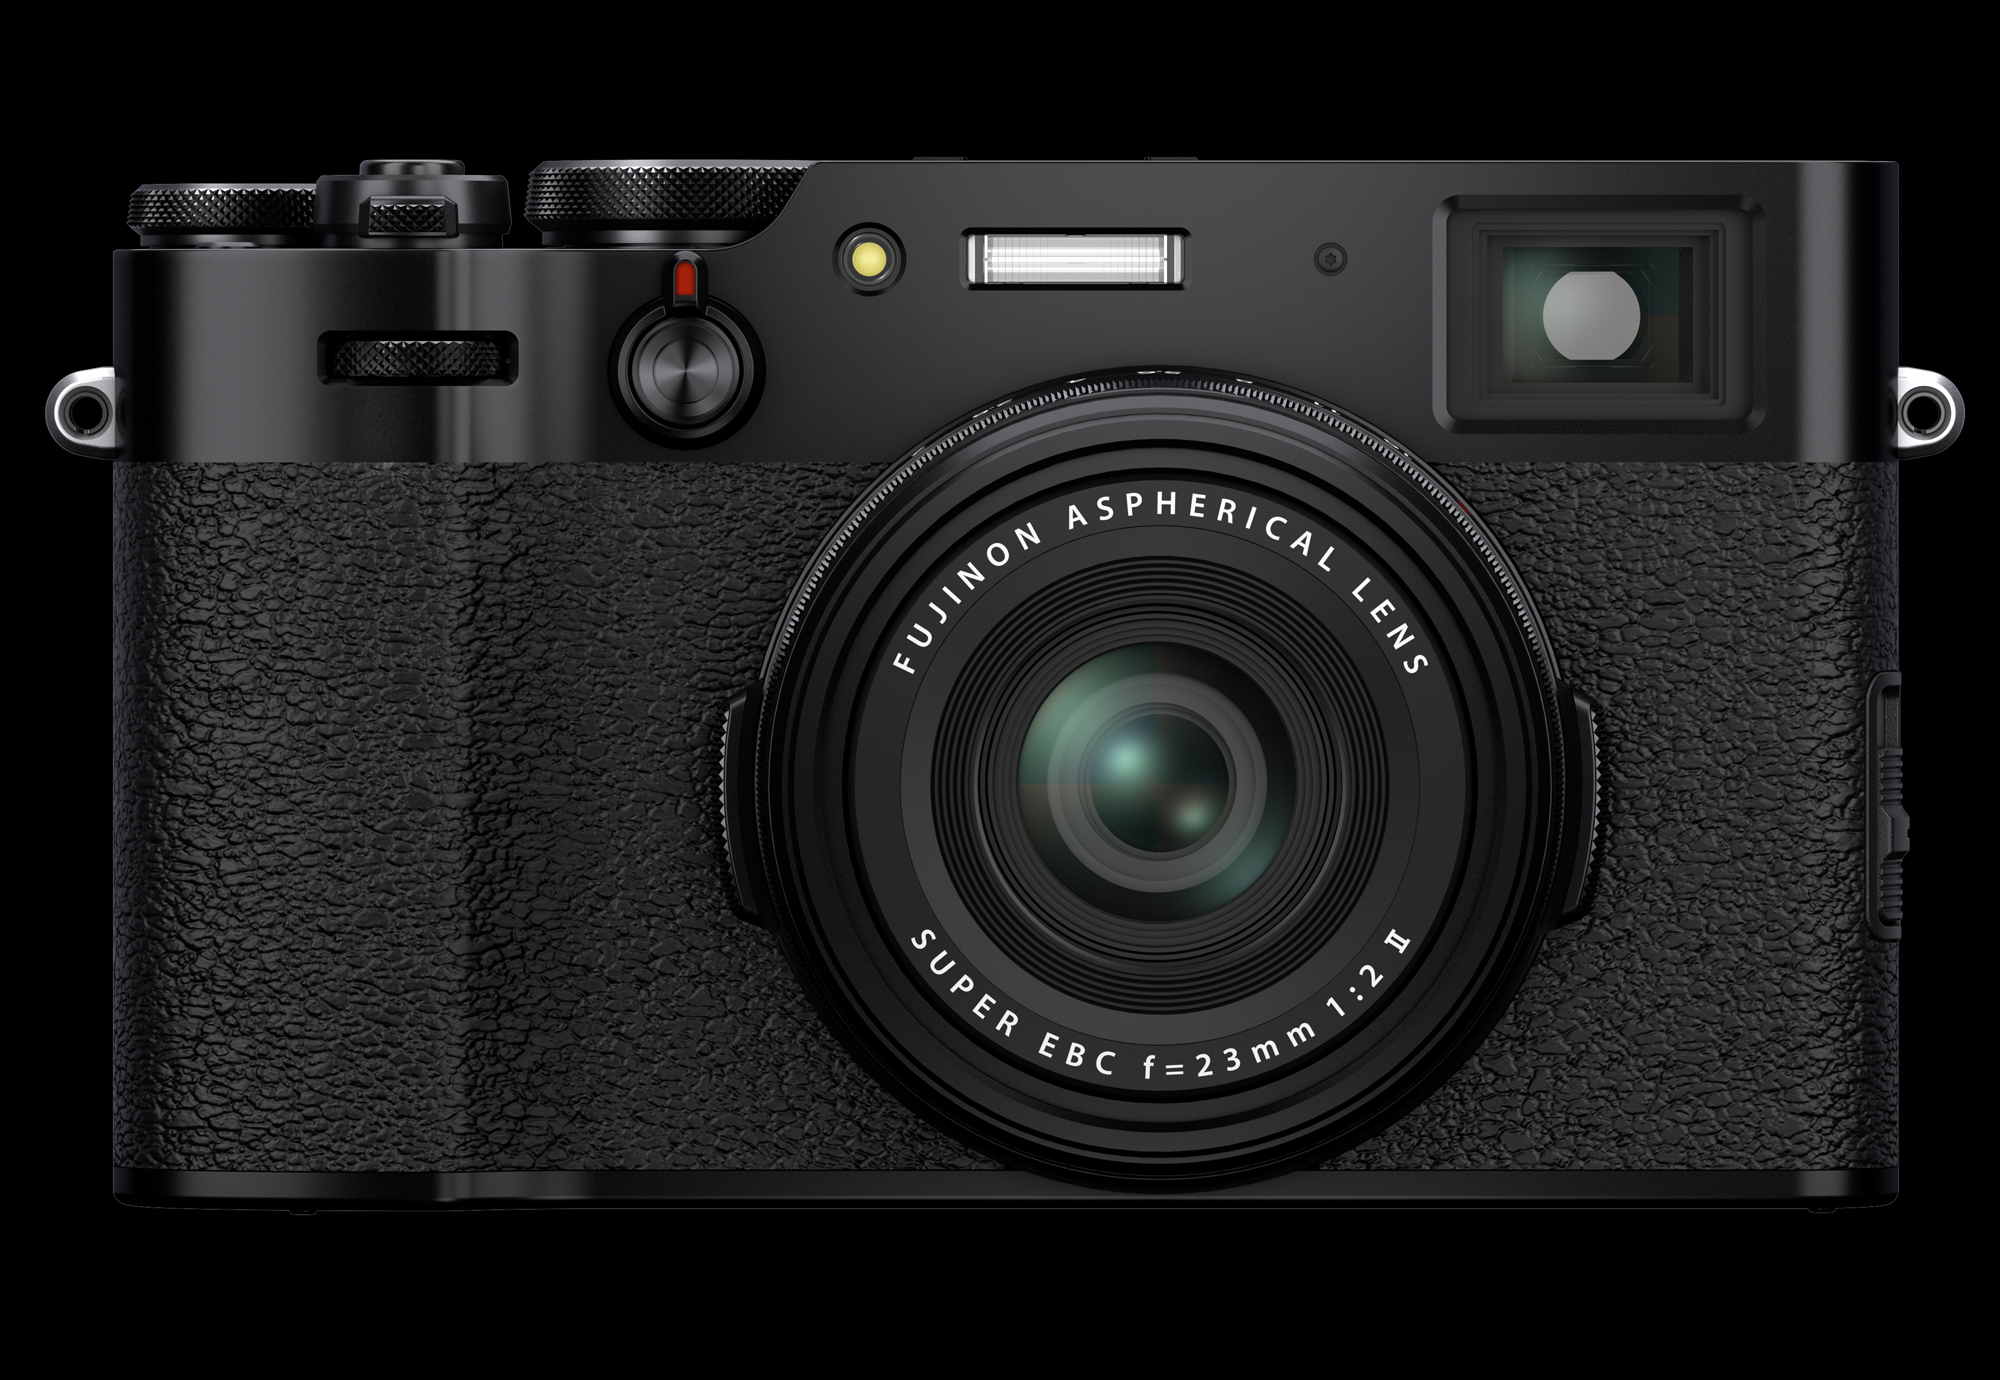 The Fujifil X100v, my new favorite camera